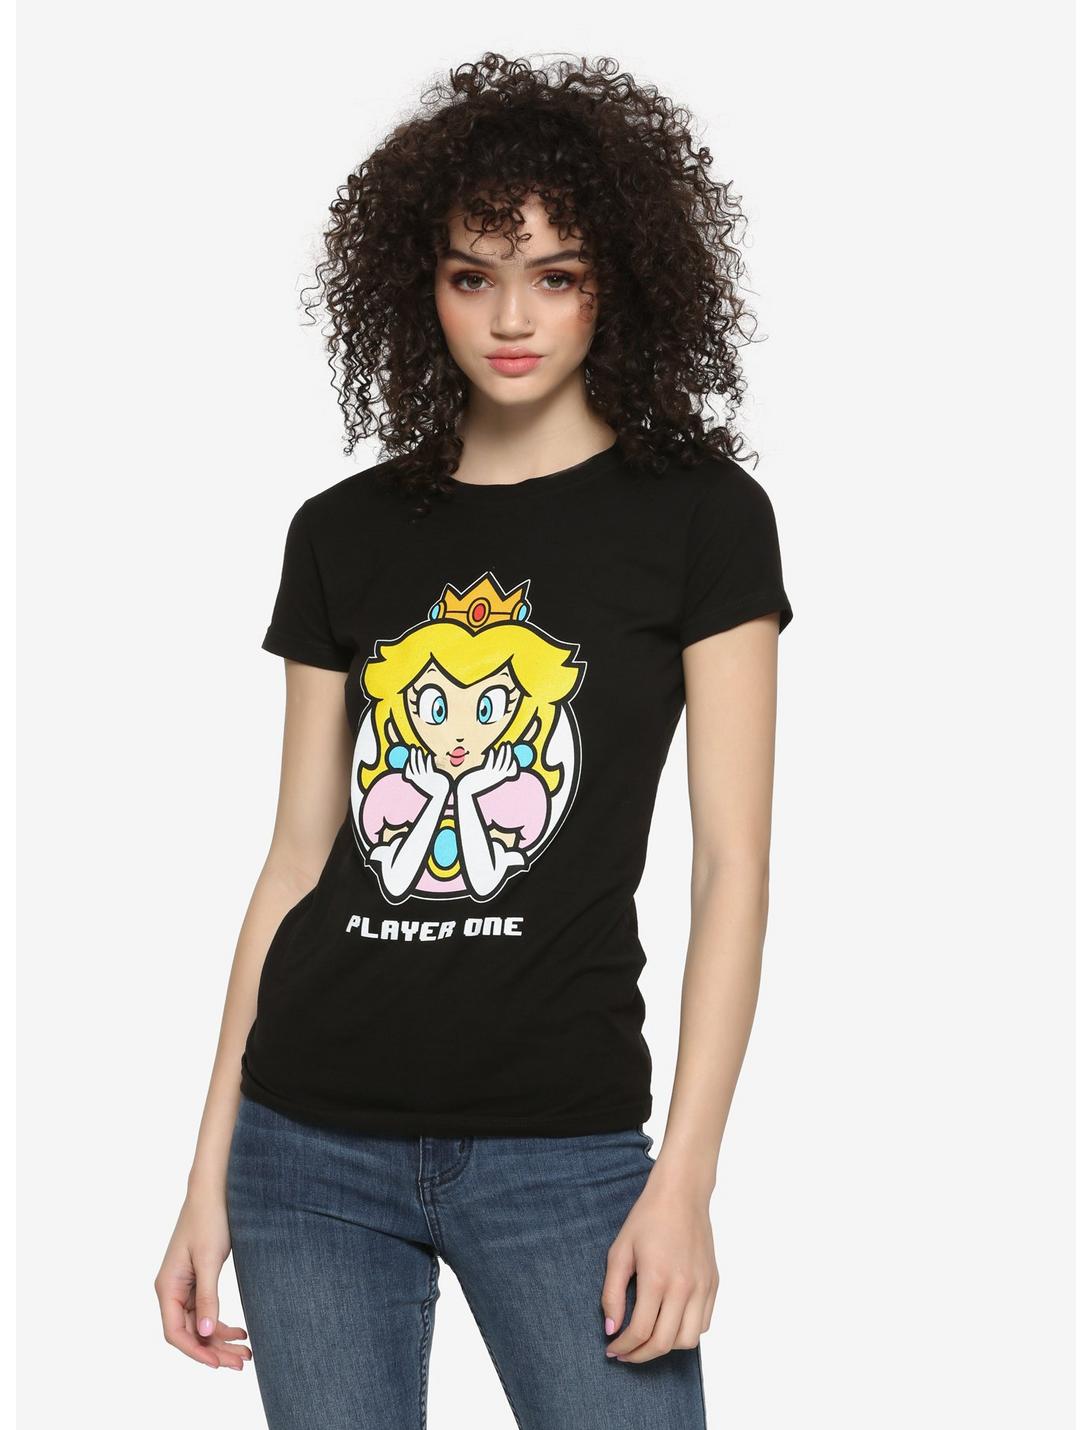 Super Mario Bros. Princess Peach Player One Girls T-Shirt, BLACK, hi-res